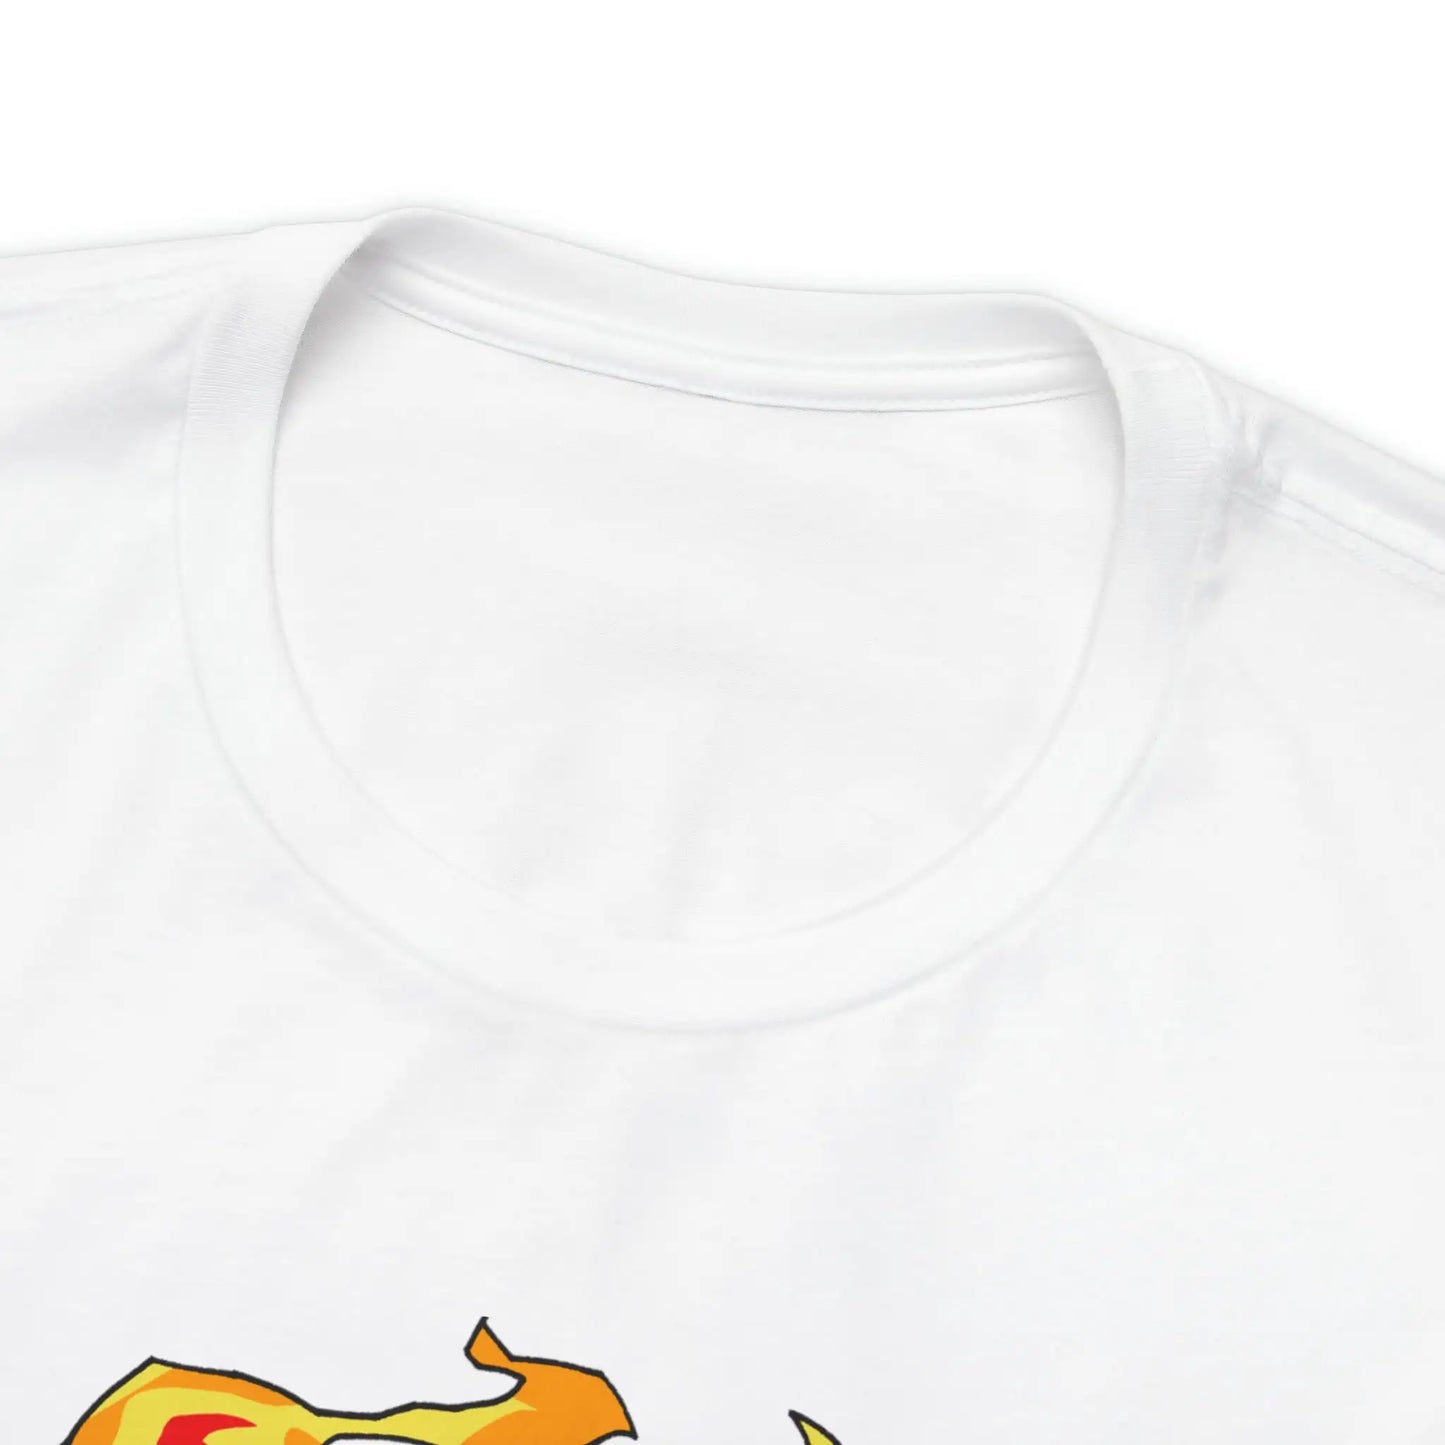 Ghost Rider T-shirt Cartoon Parody Tee Unisex For Men and Women